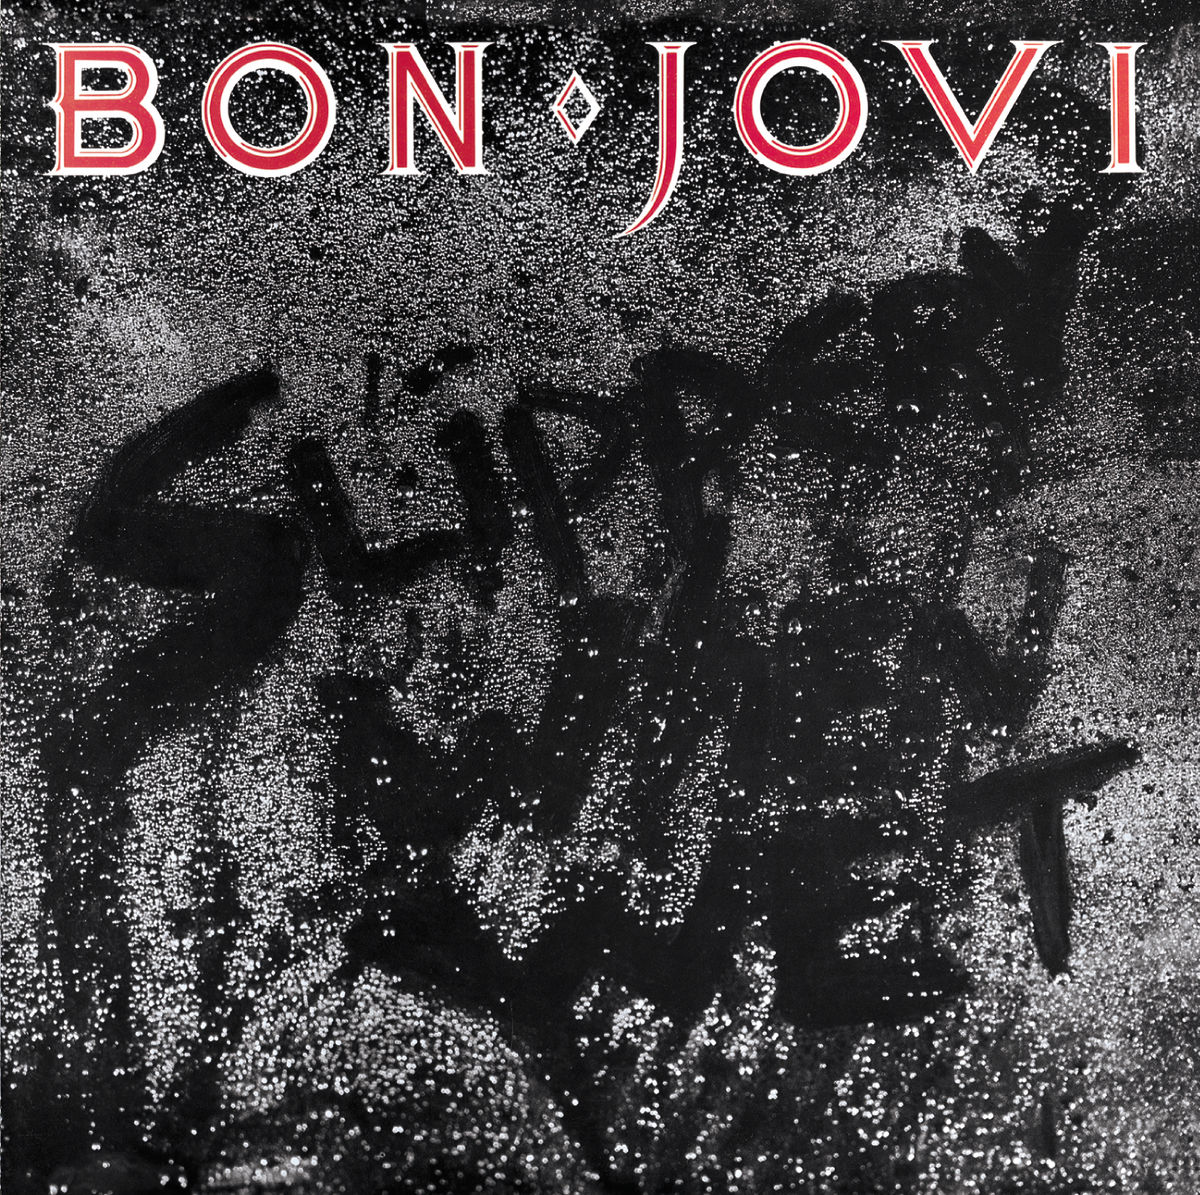 Art for Livin' On a Prayer by Bon Jovi